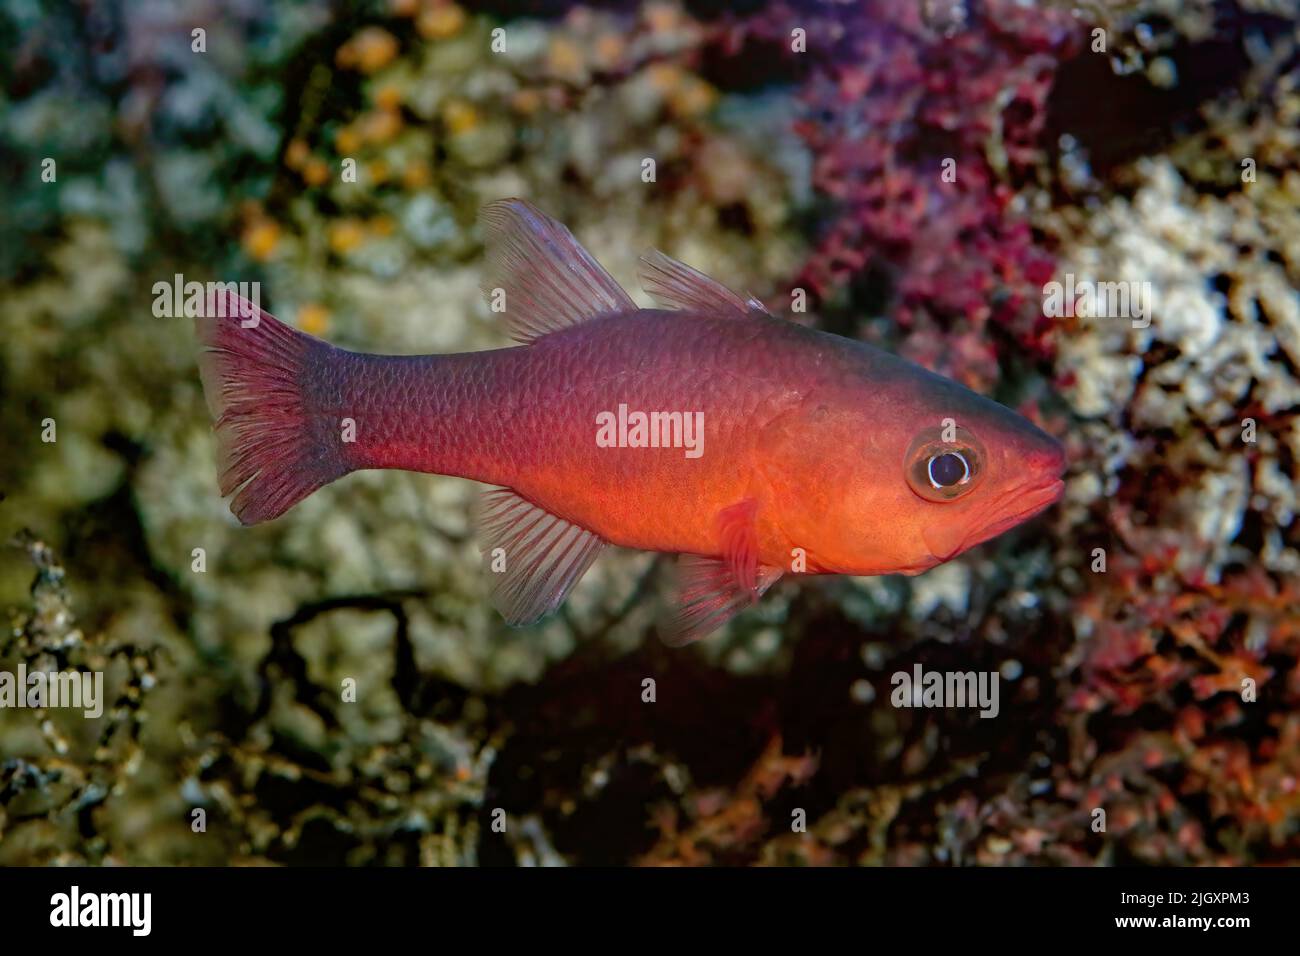 Guadalupe Cardinalfish, Apogon guadalupensis, Eastern Pacific, Reef Fish Stock Photo